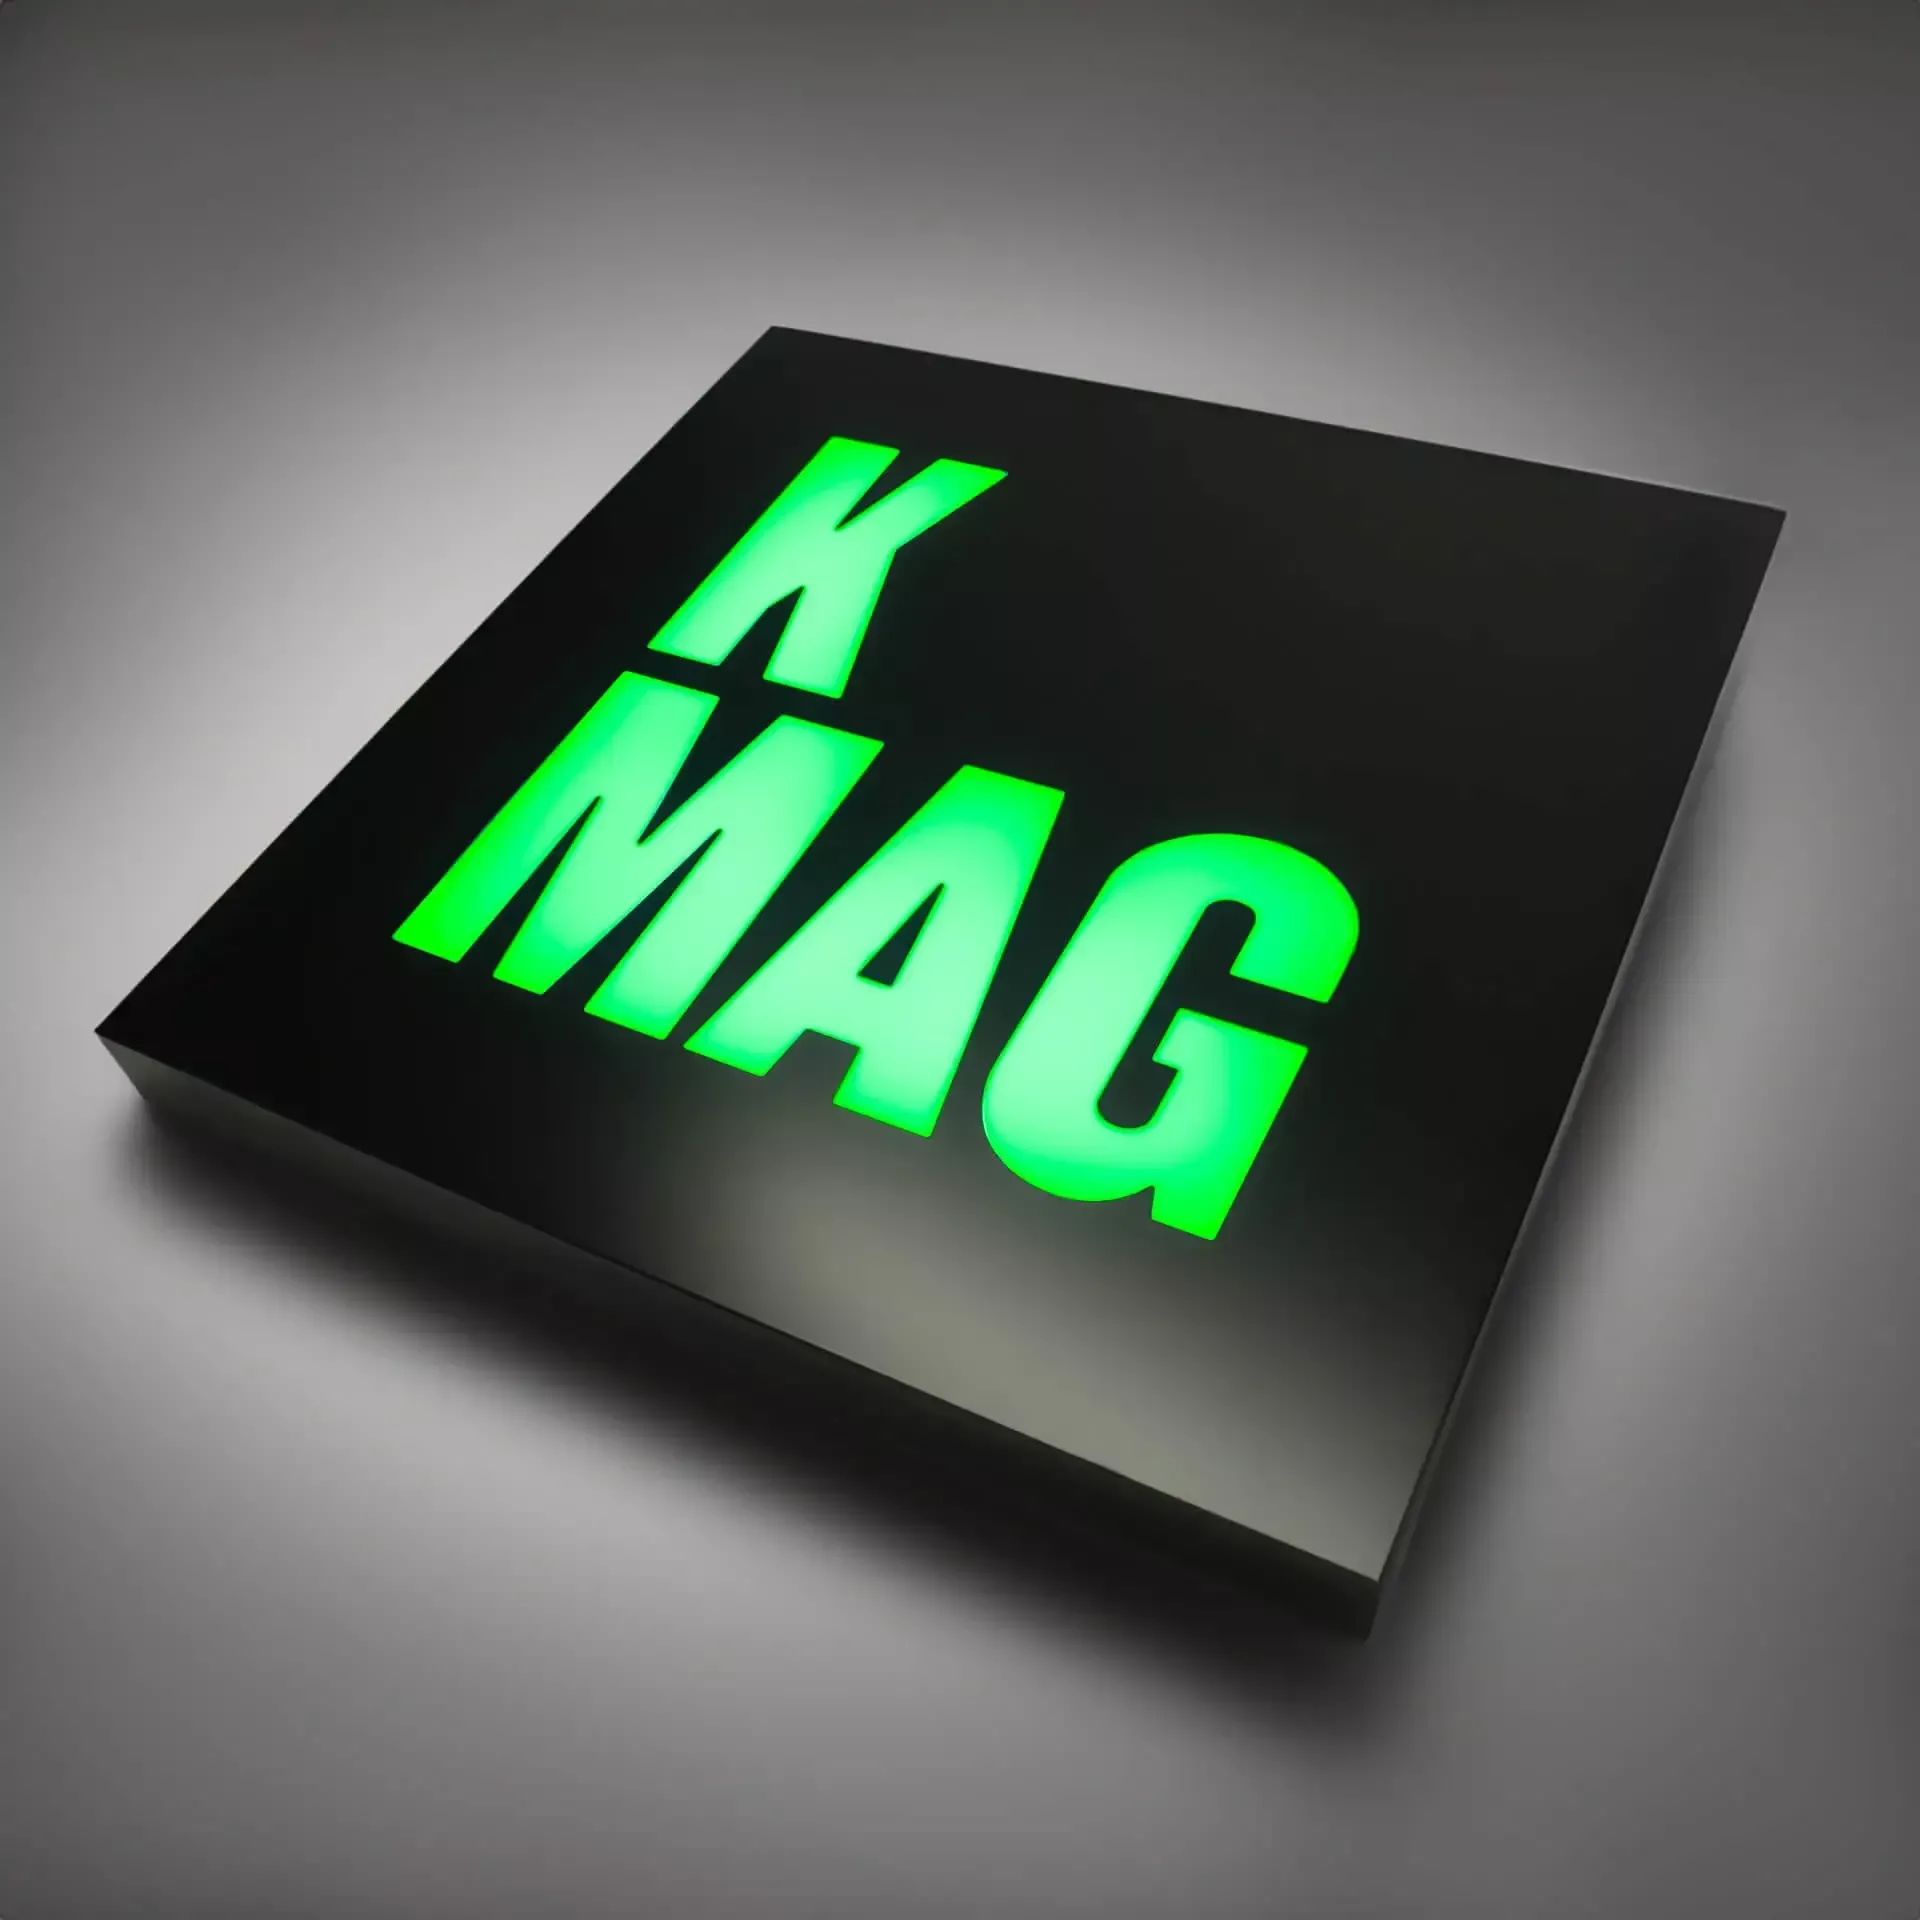 K MAG - Caja de luz LED iluminada